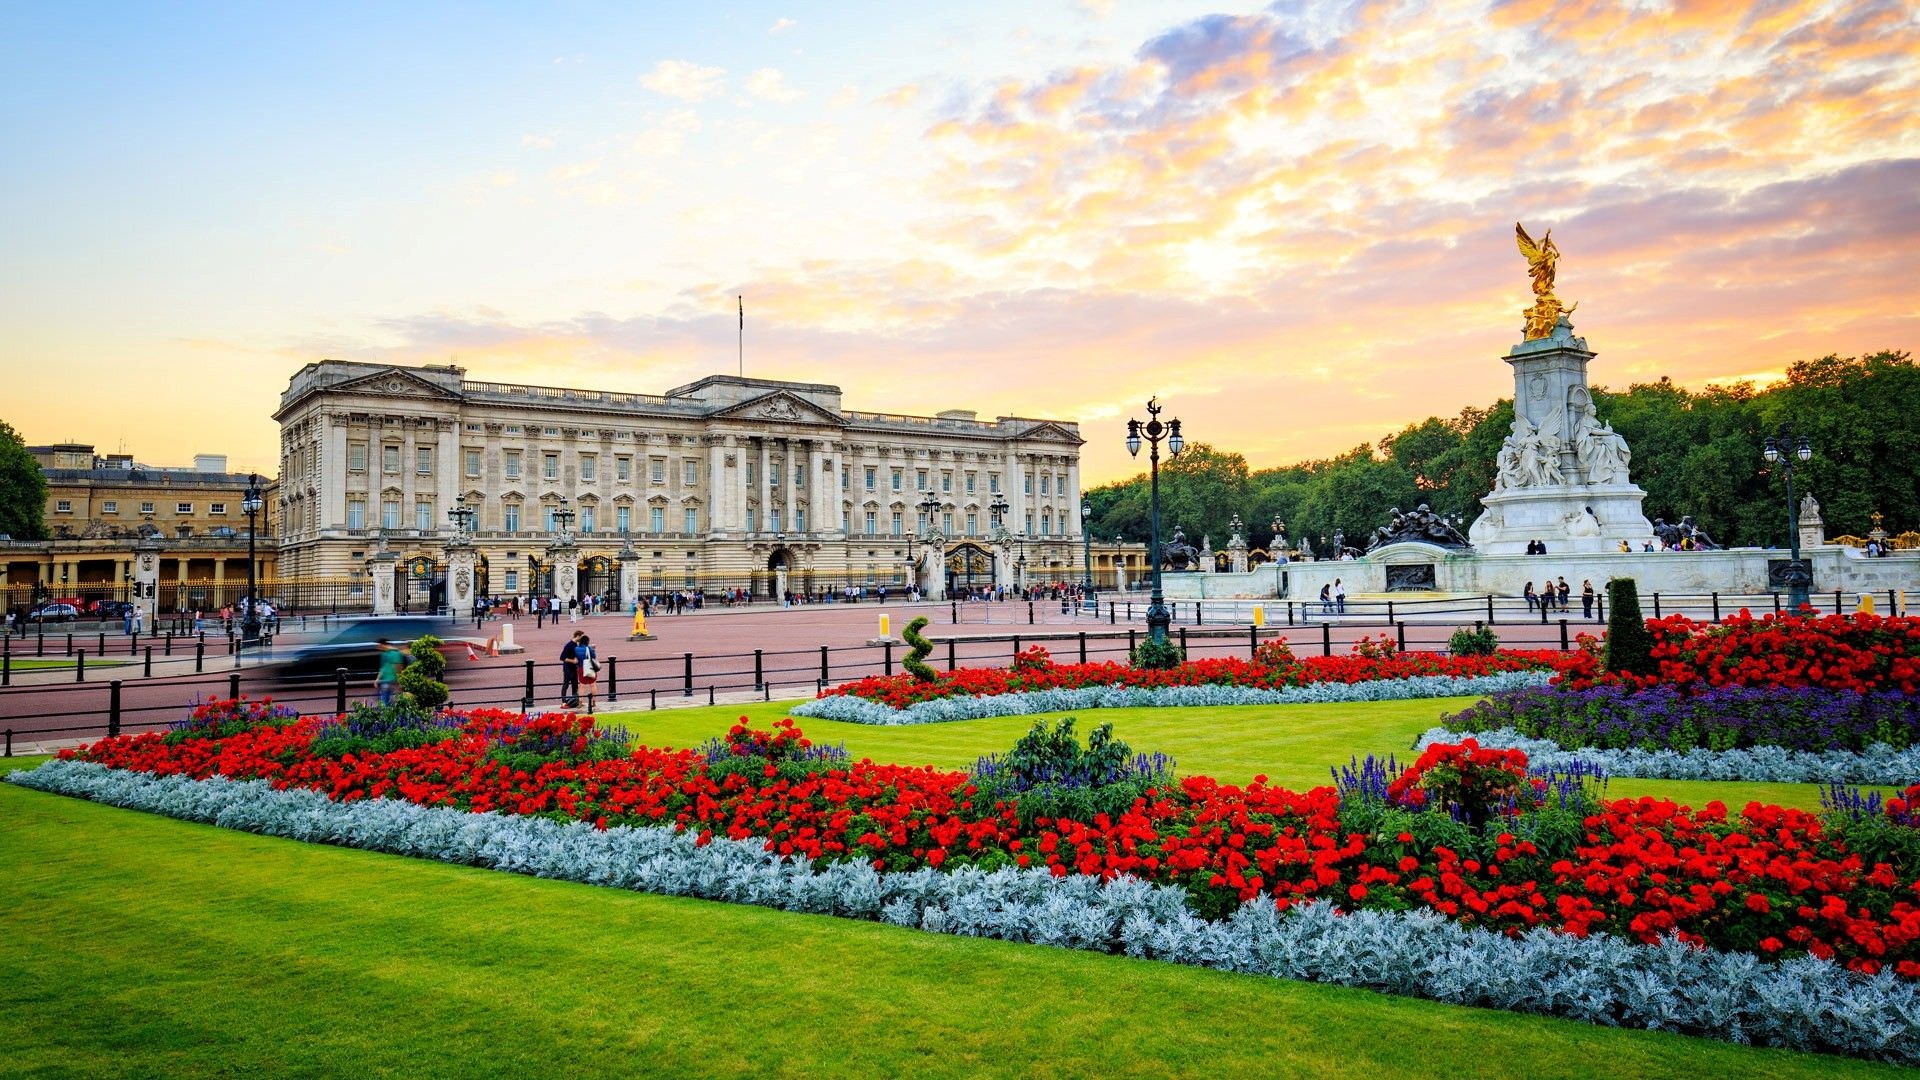 Palace: Buckingham Palace, St James's Park, A London royal residence. 1920x1080 Full HD Background.